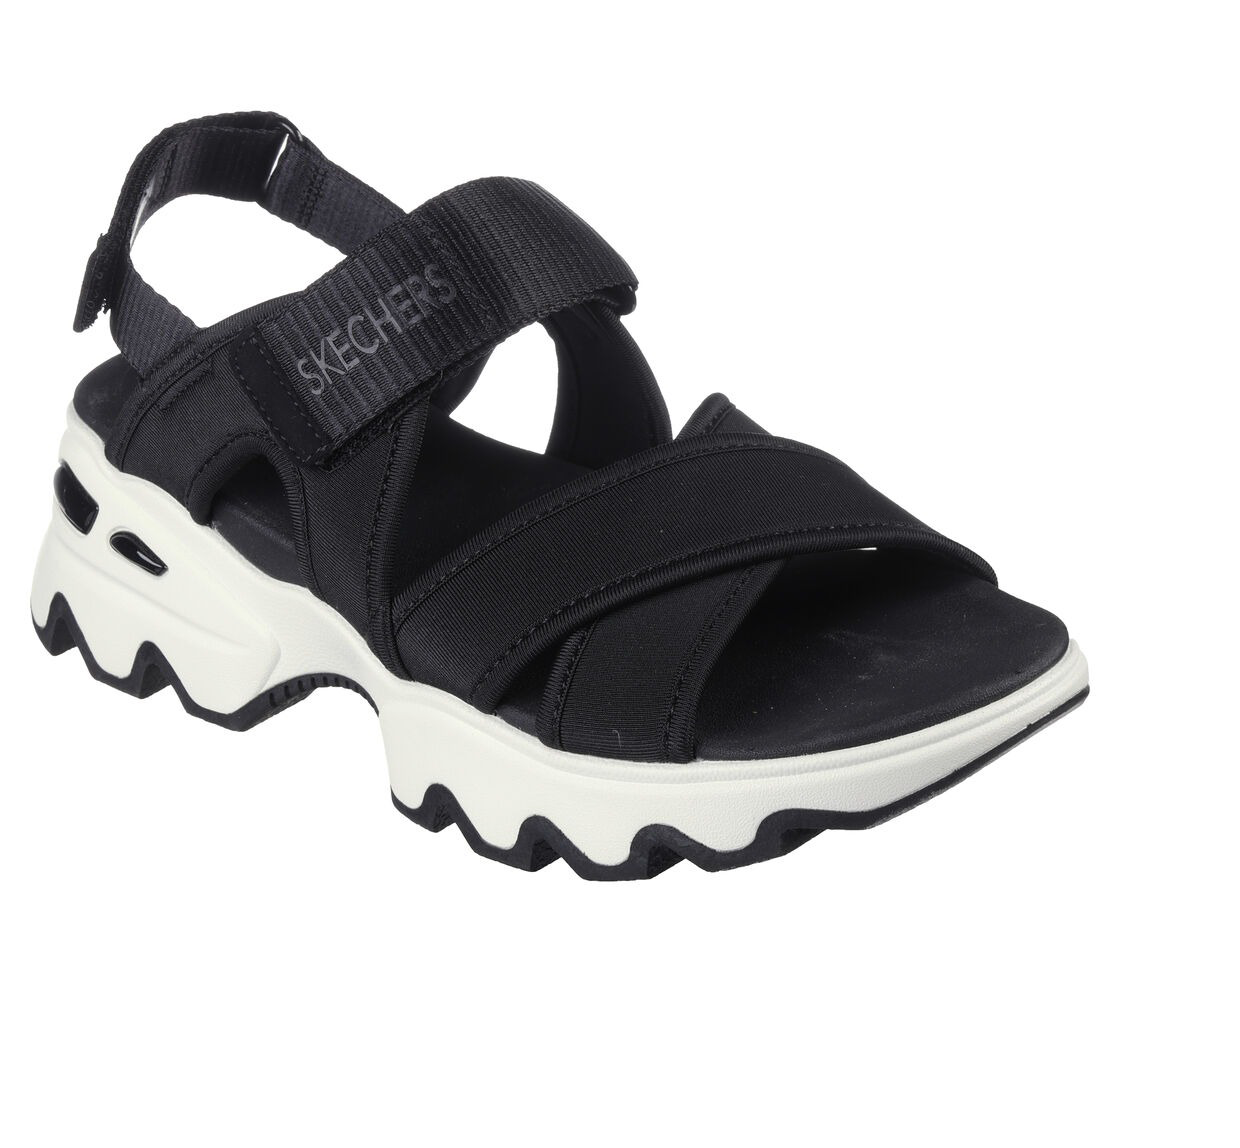 Women Sport Sandals Open Toe Pump Peep Toe Platform Wedge Heels Casual  Sandals | eBay